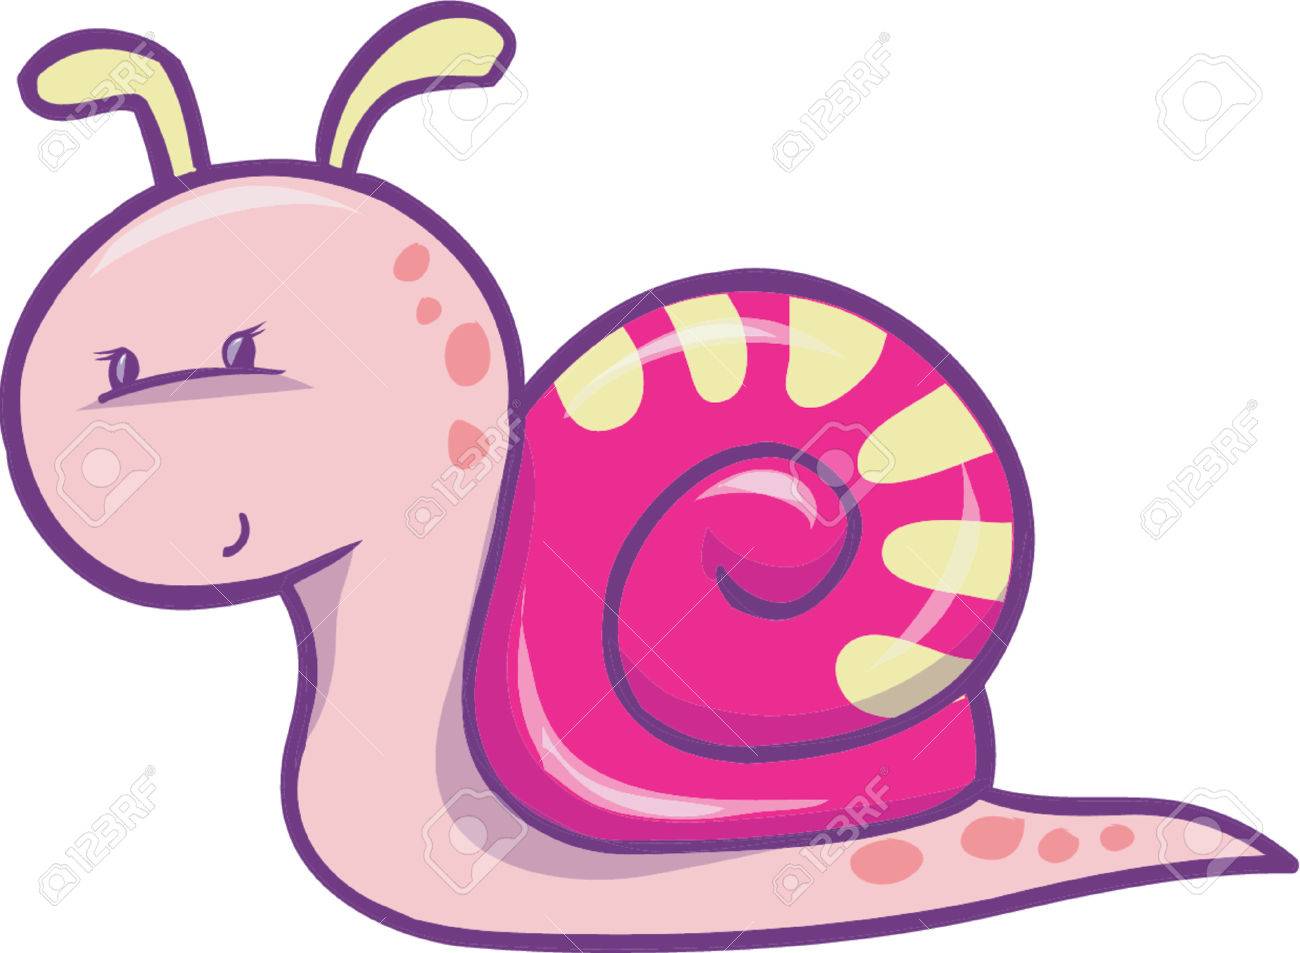 Snail clipart pink.